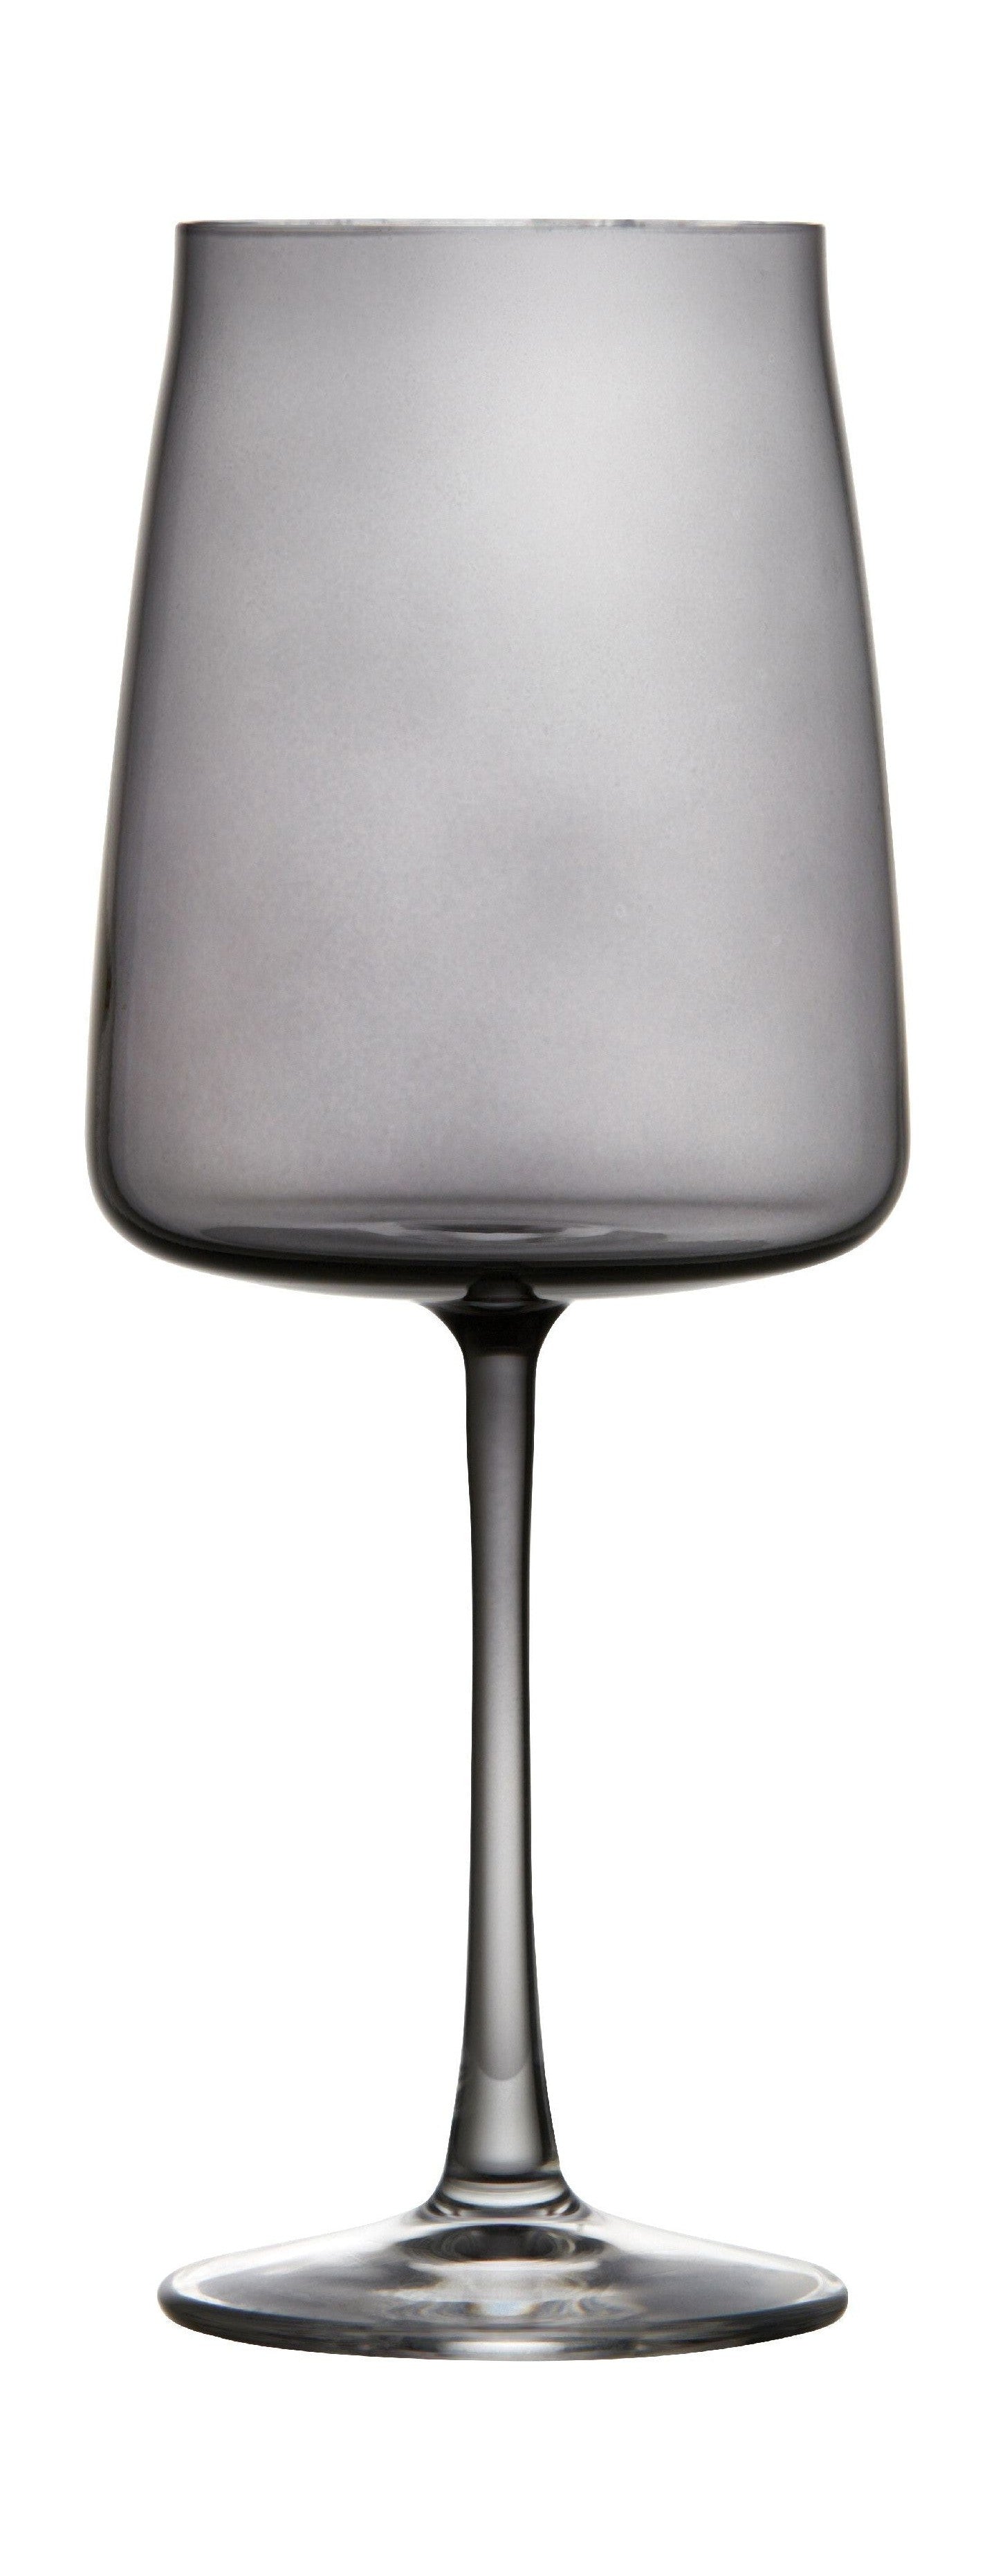 Lyngby Glas Krystal Zero Red Wine Glass 54 Cl 4 Pcs, Smoke